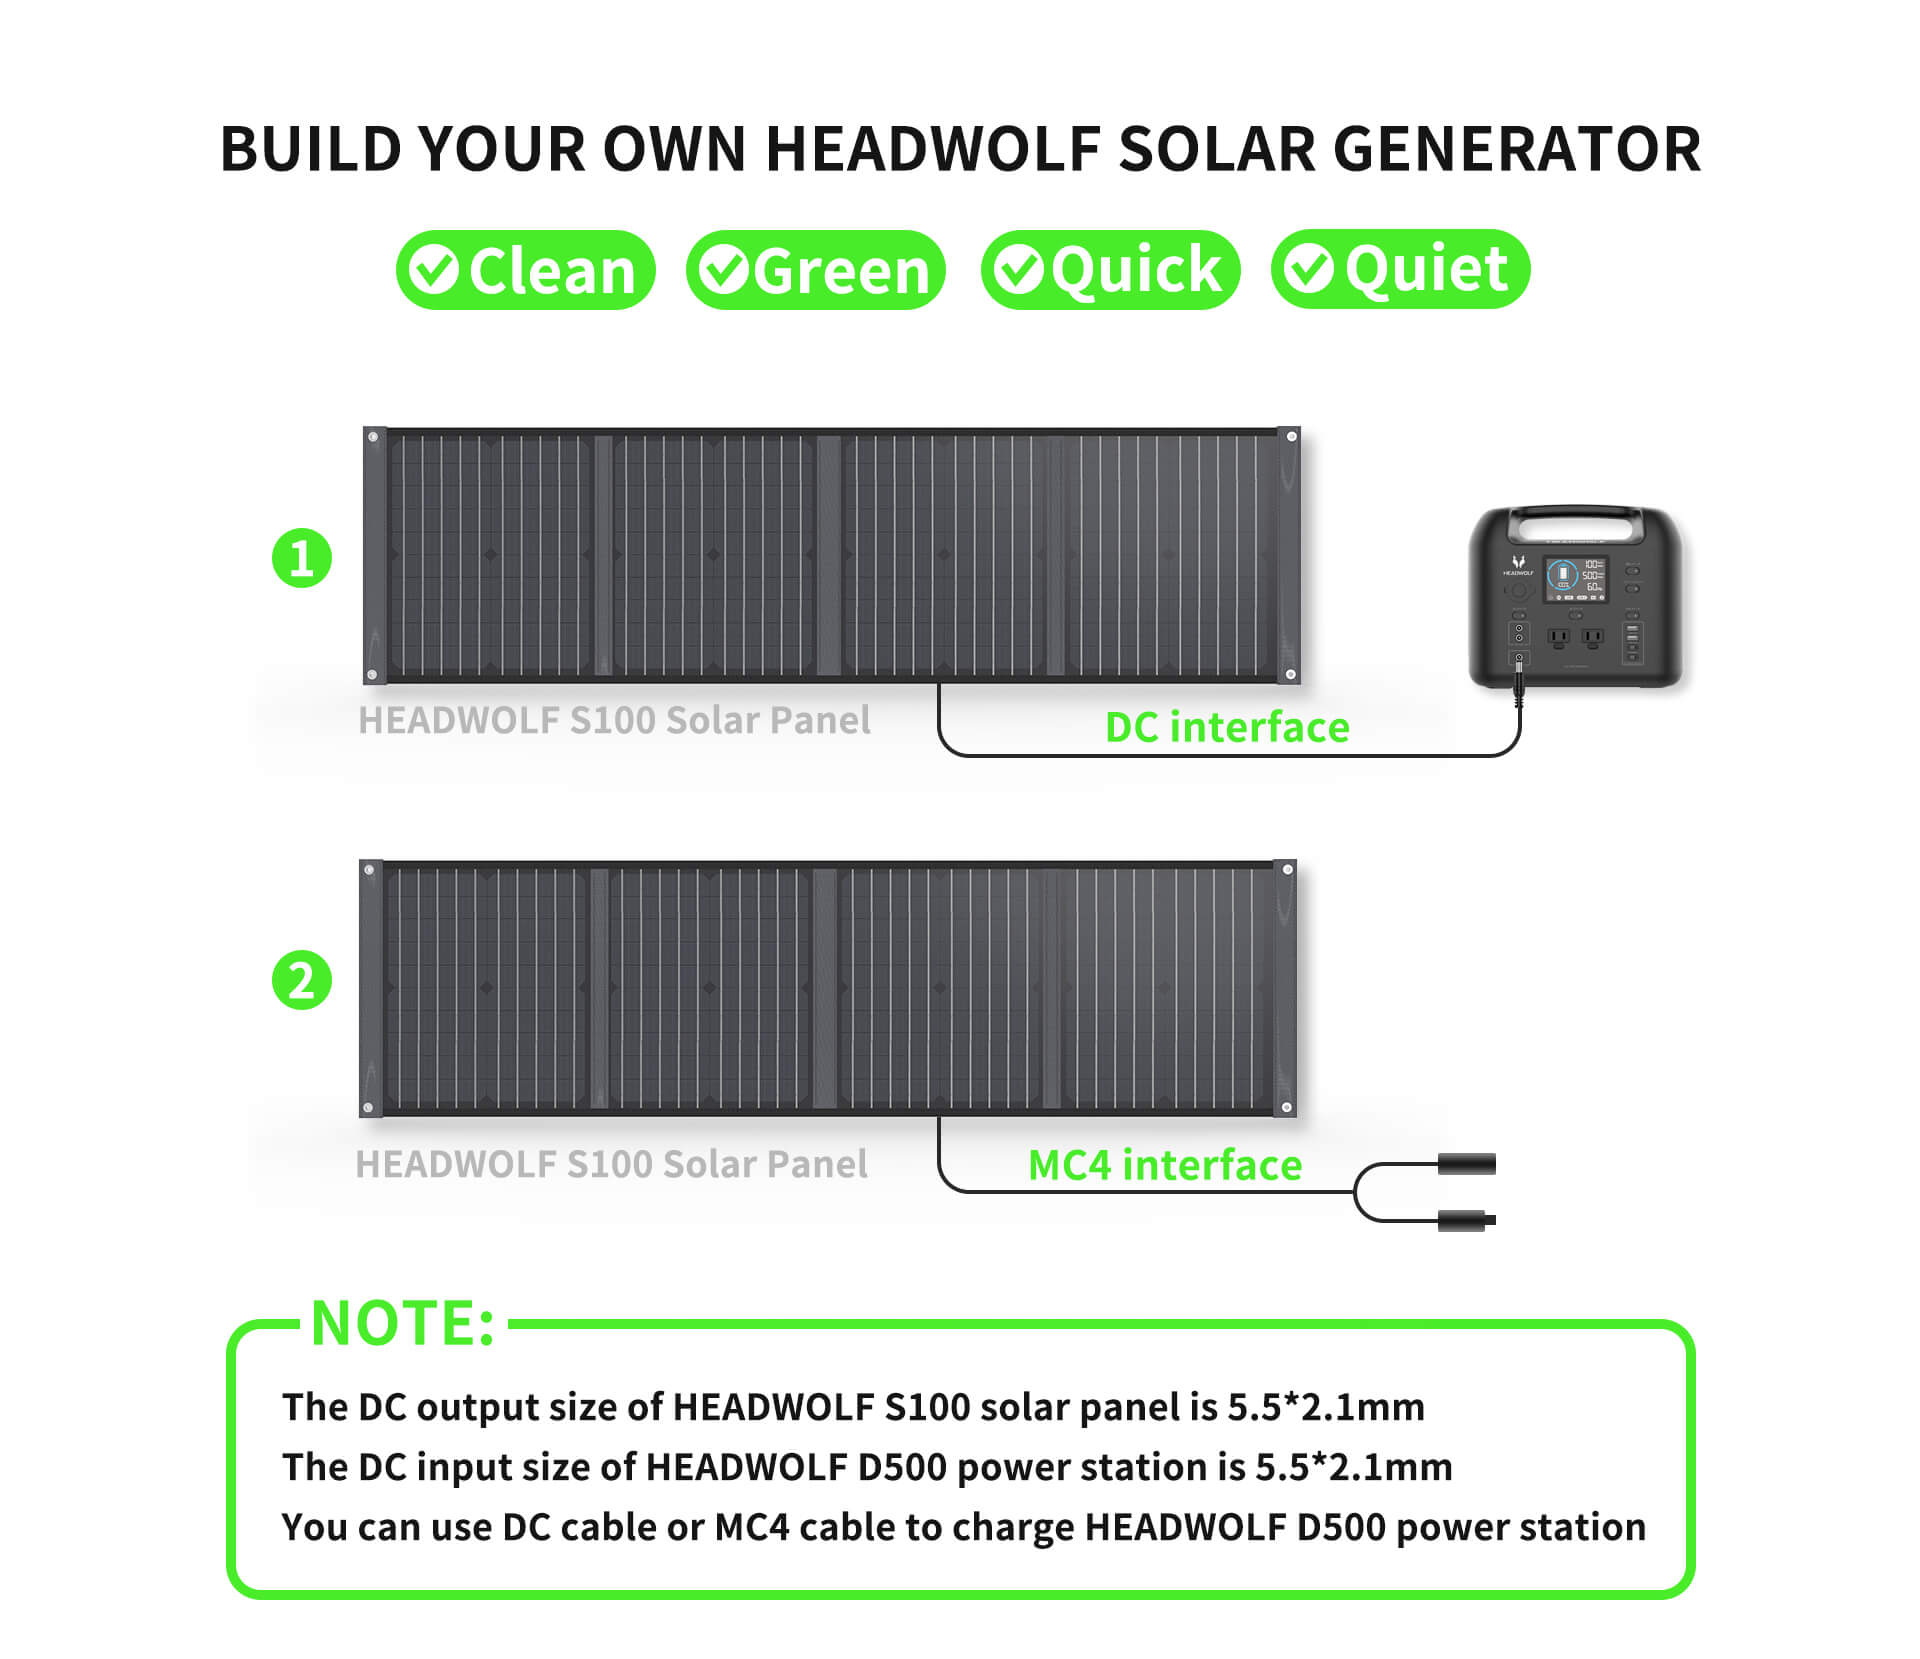 Build your own headwolf solar generator